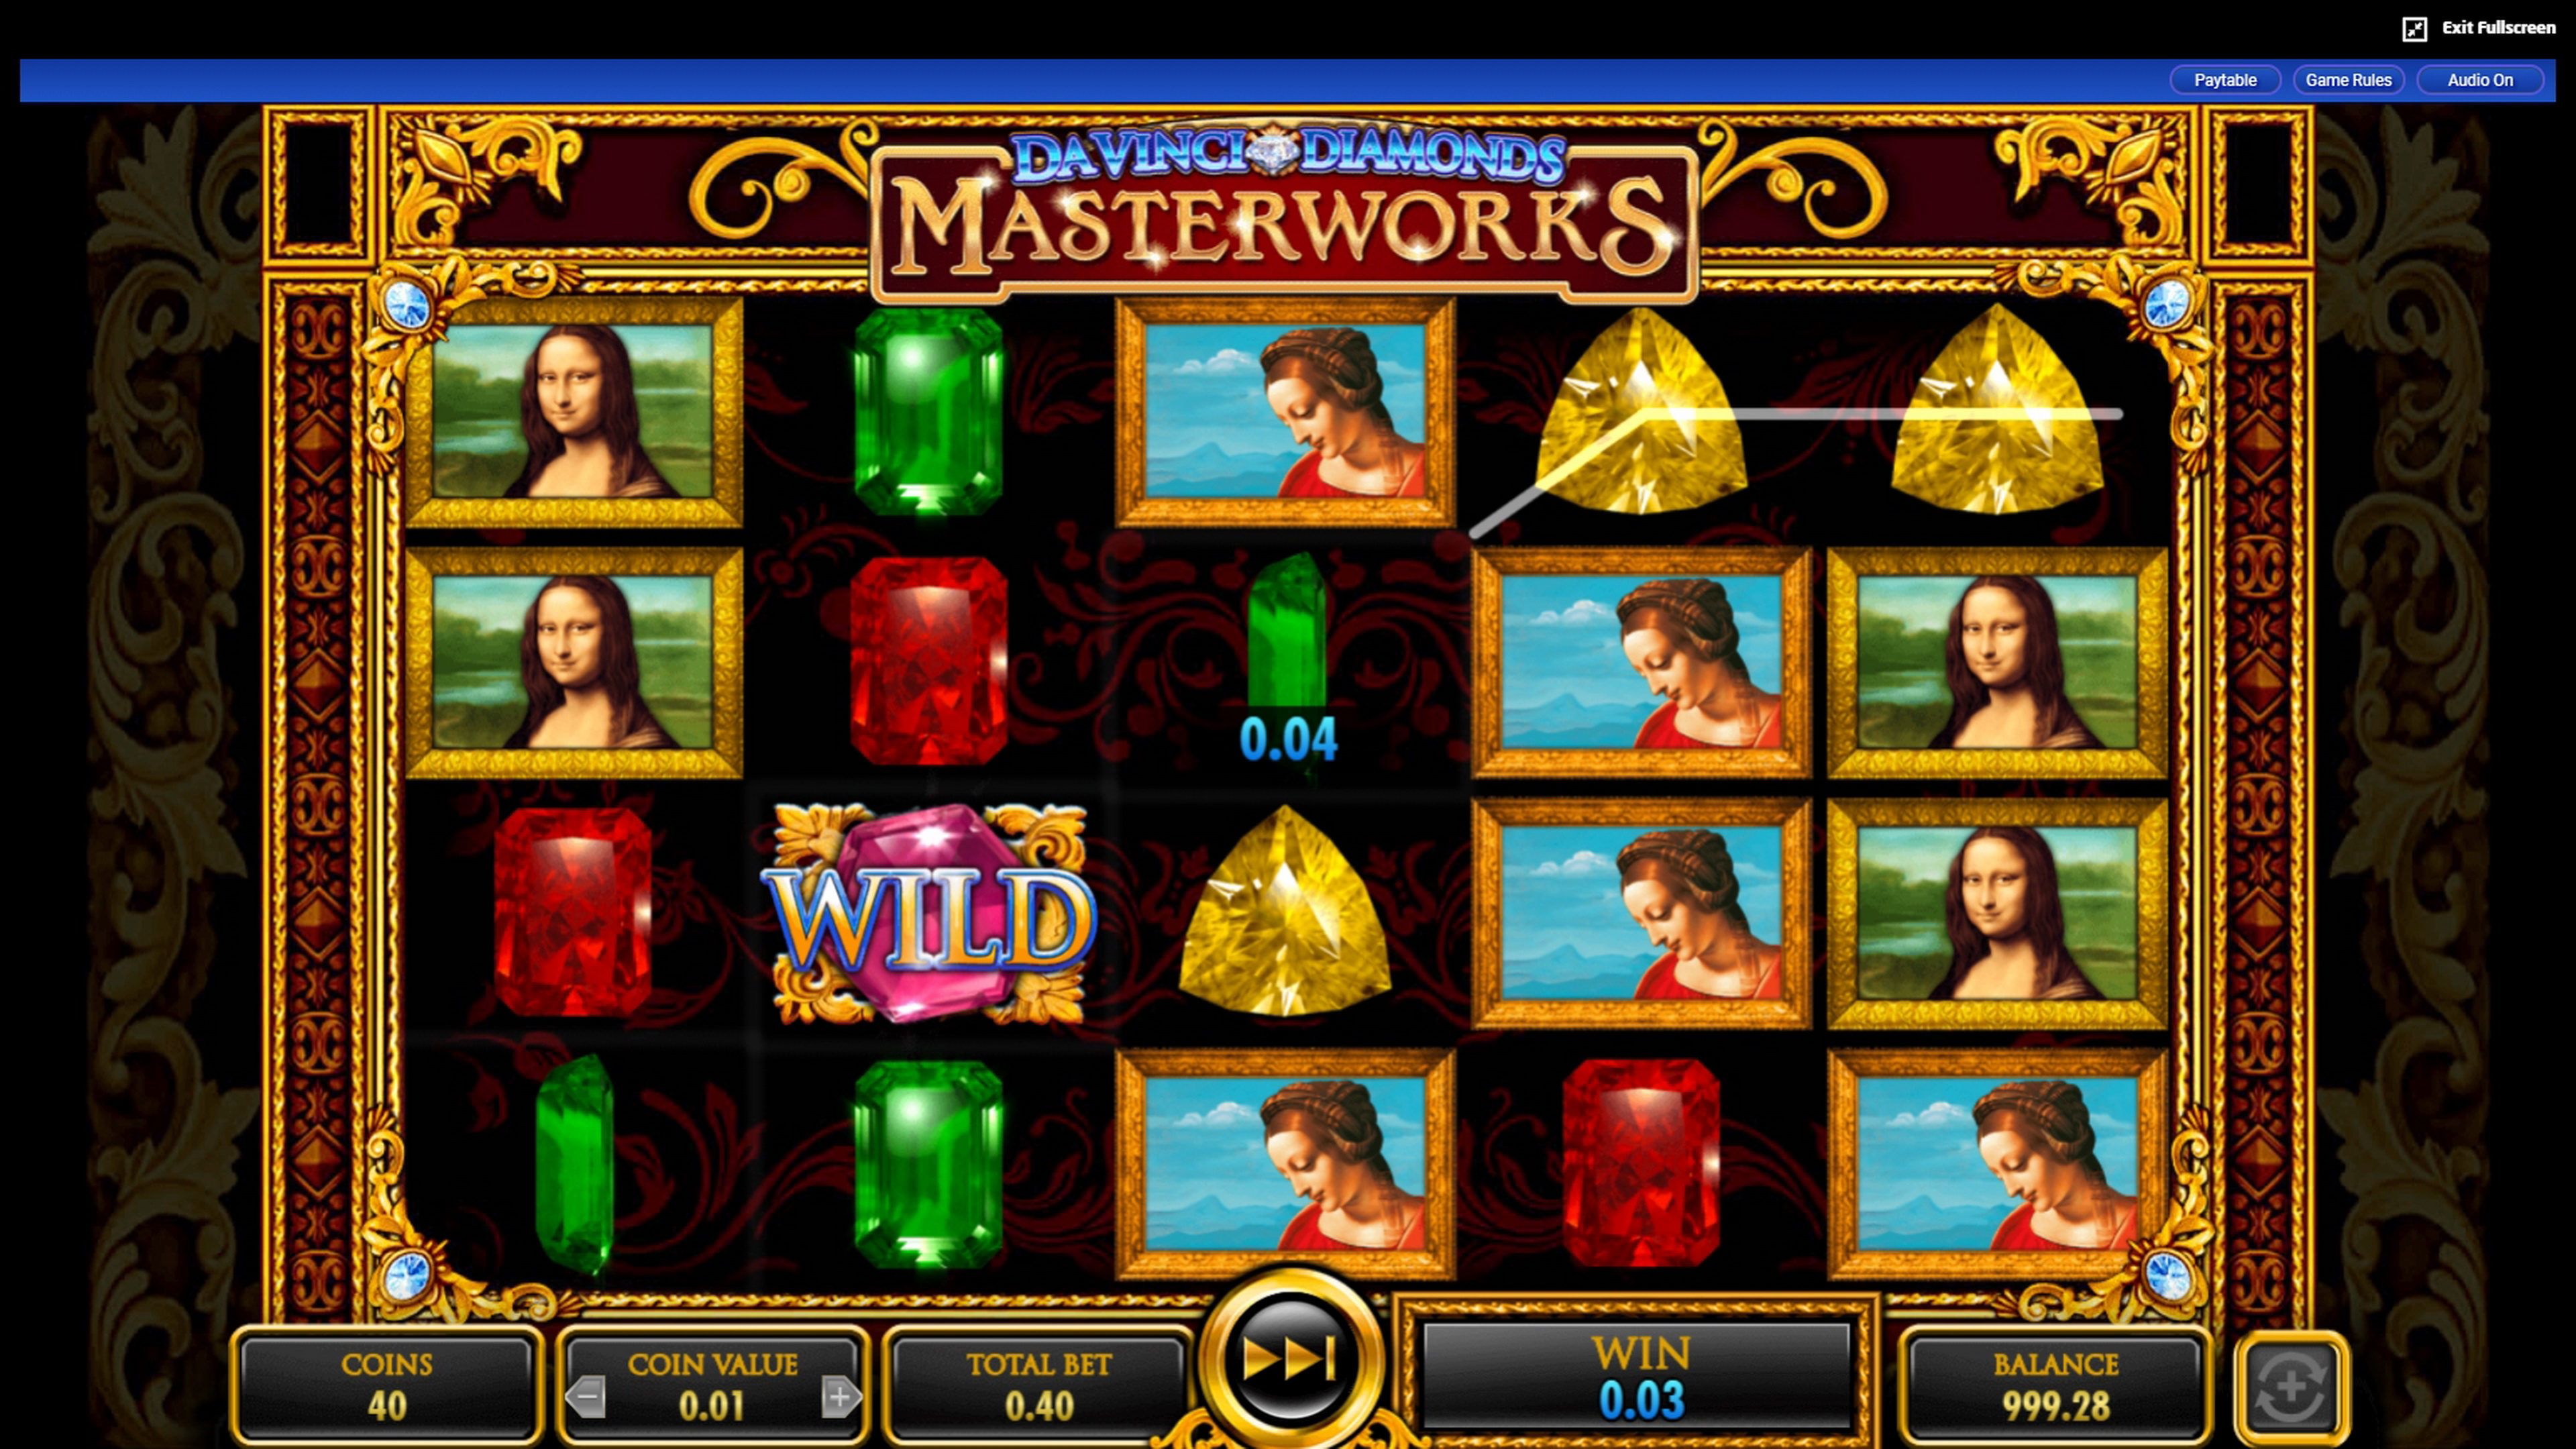 Win Money in Da Vinci Diamonds Masterworks Free Slot Game by IGT